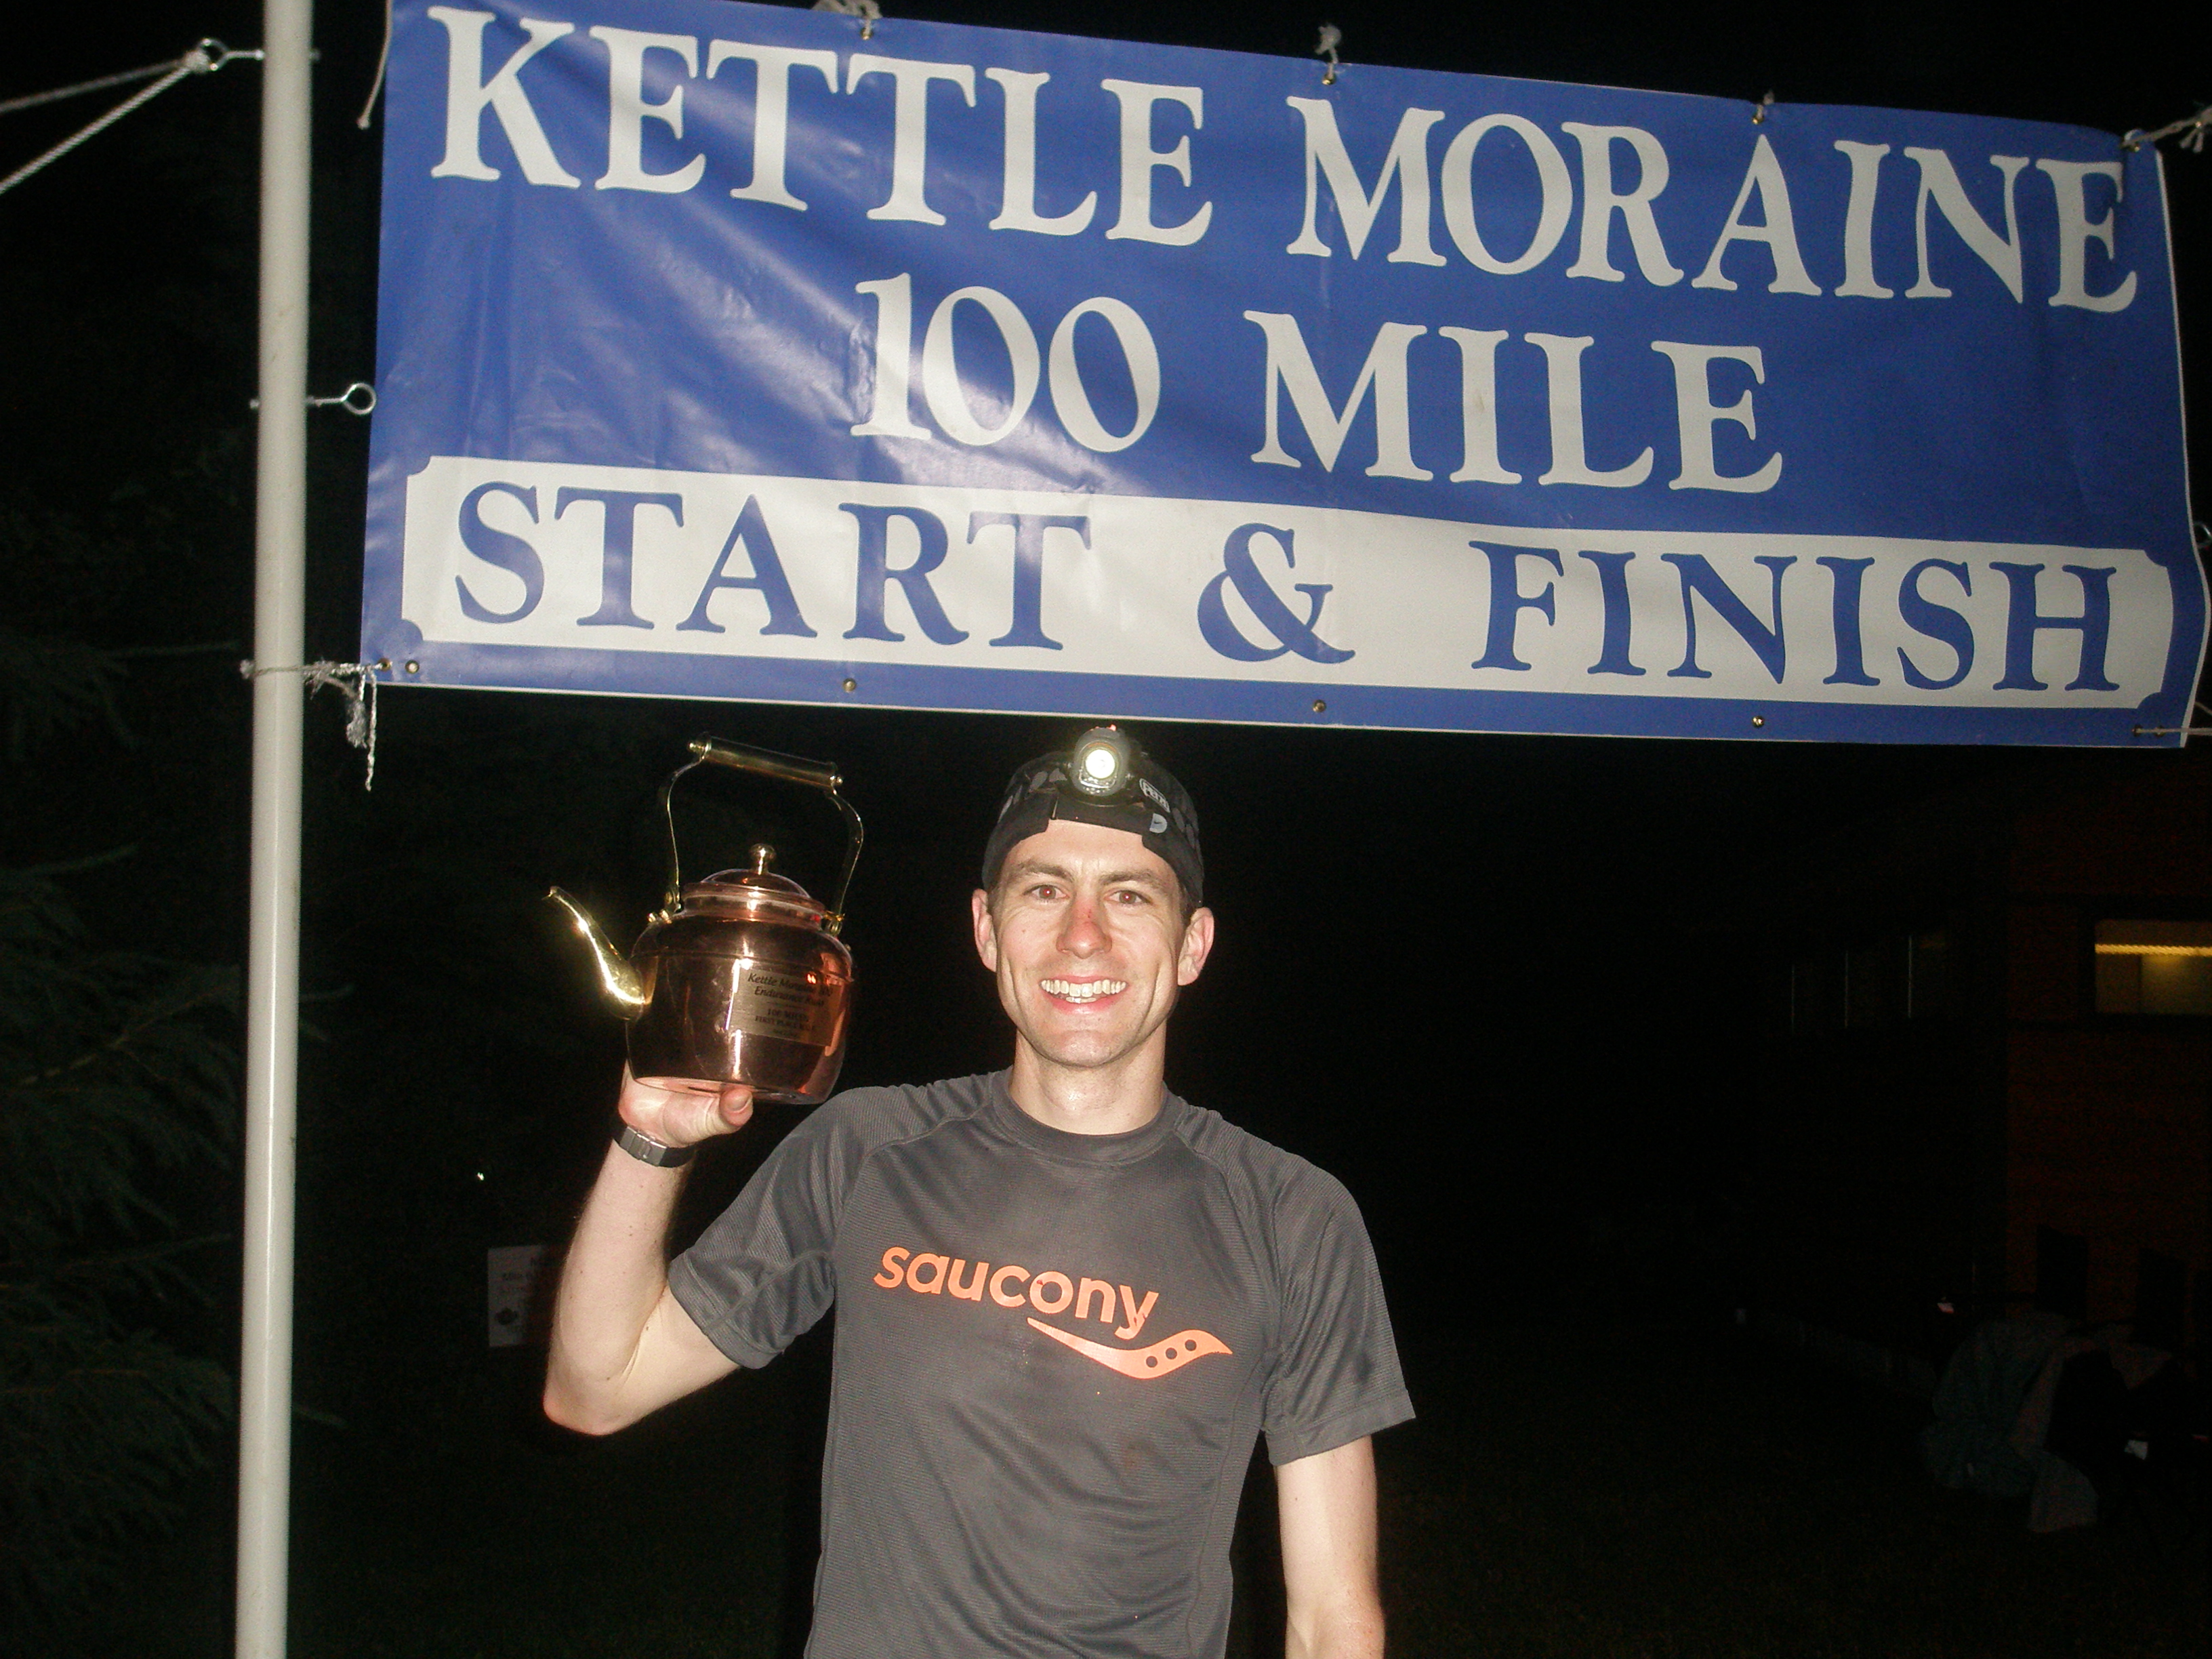 JSR Dominates the Kettle Moraine 100 Mile Endurance Run!